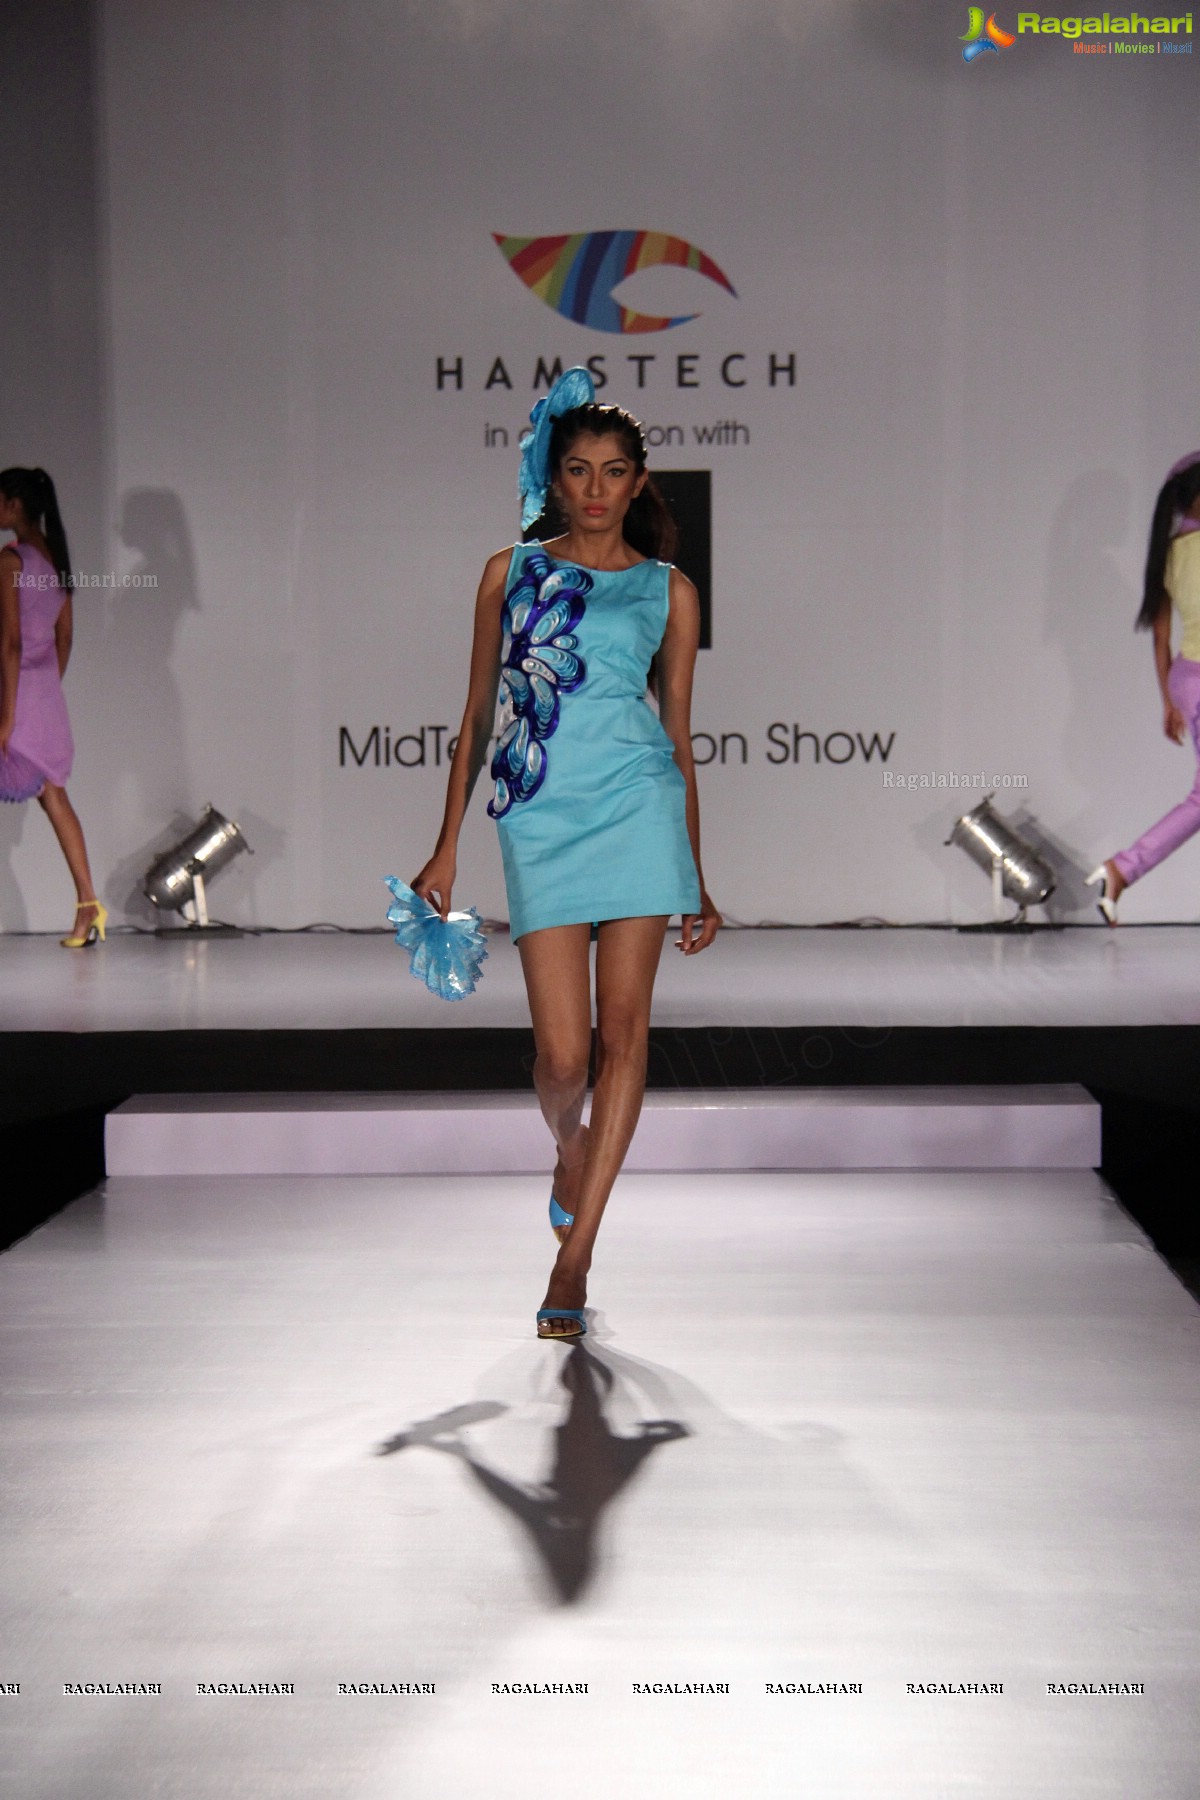 Hamstech Midterm Fashion Show 2014